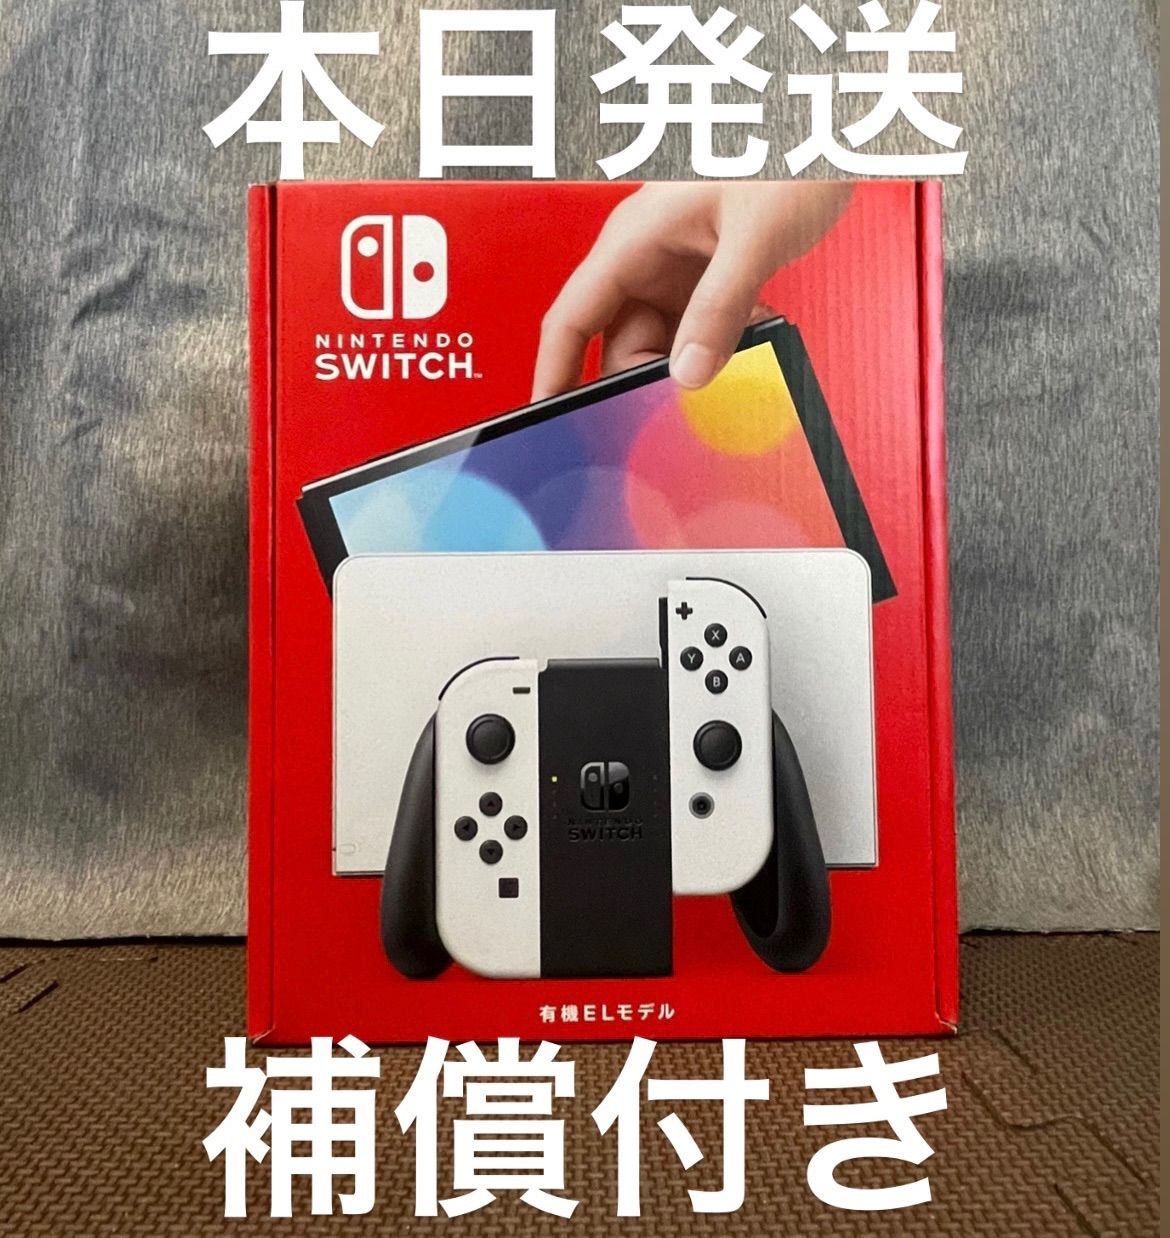 Nintendo Switch  (有機ELモデル)ホワイト